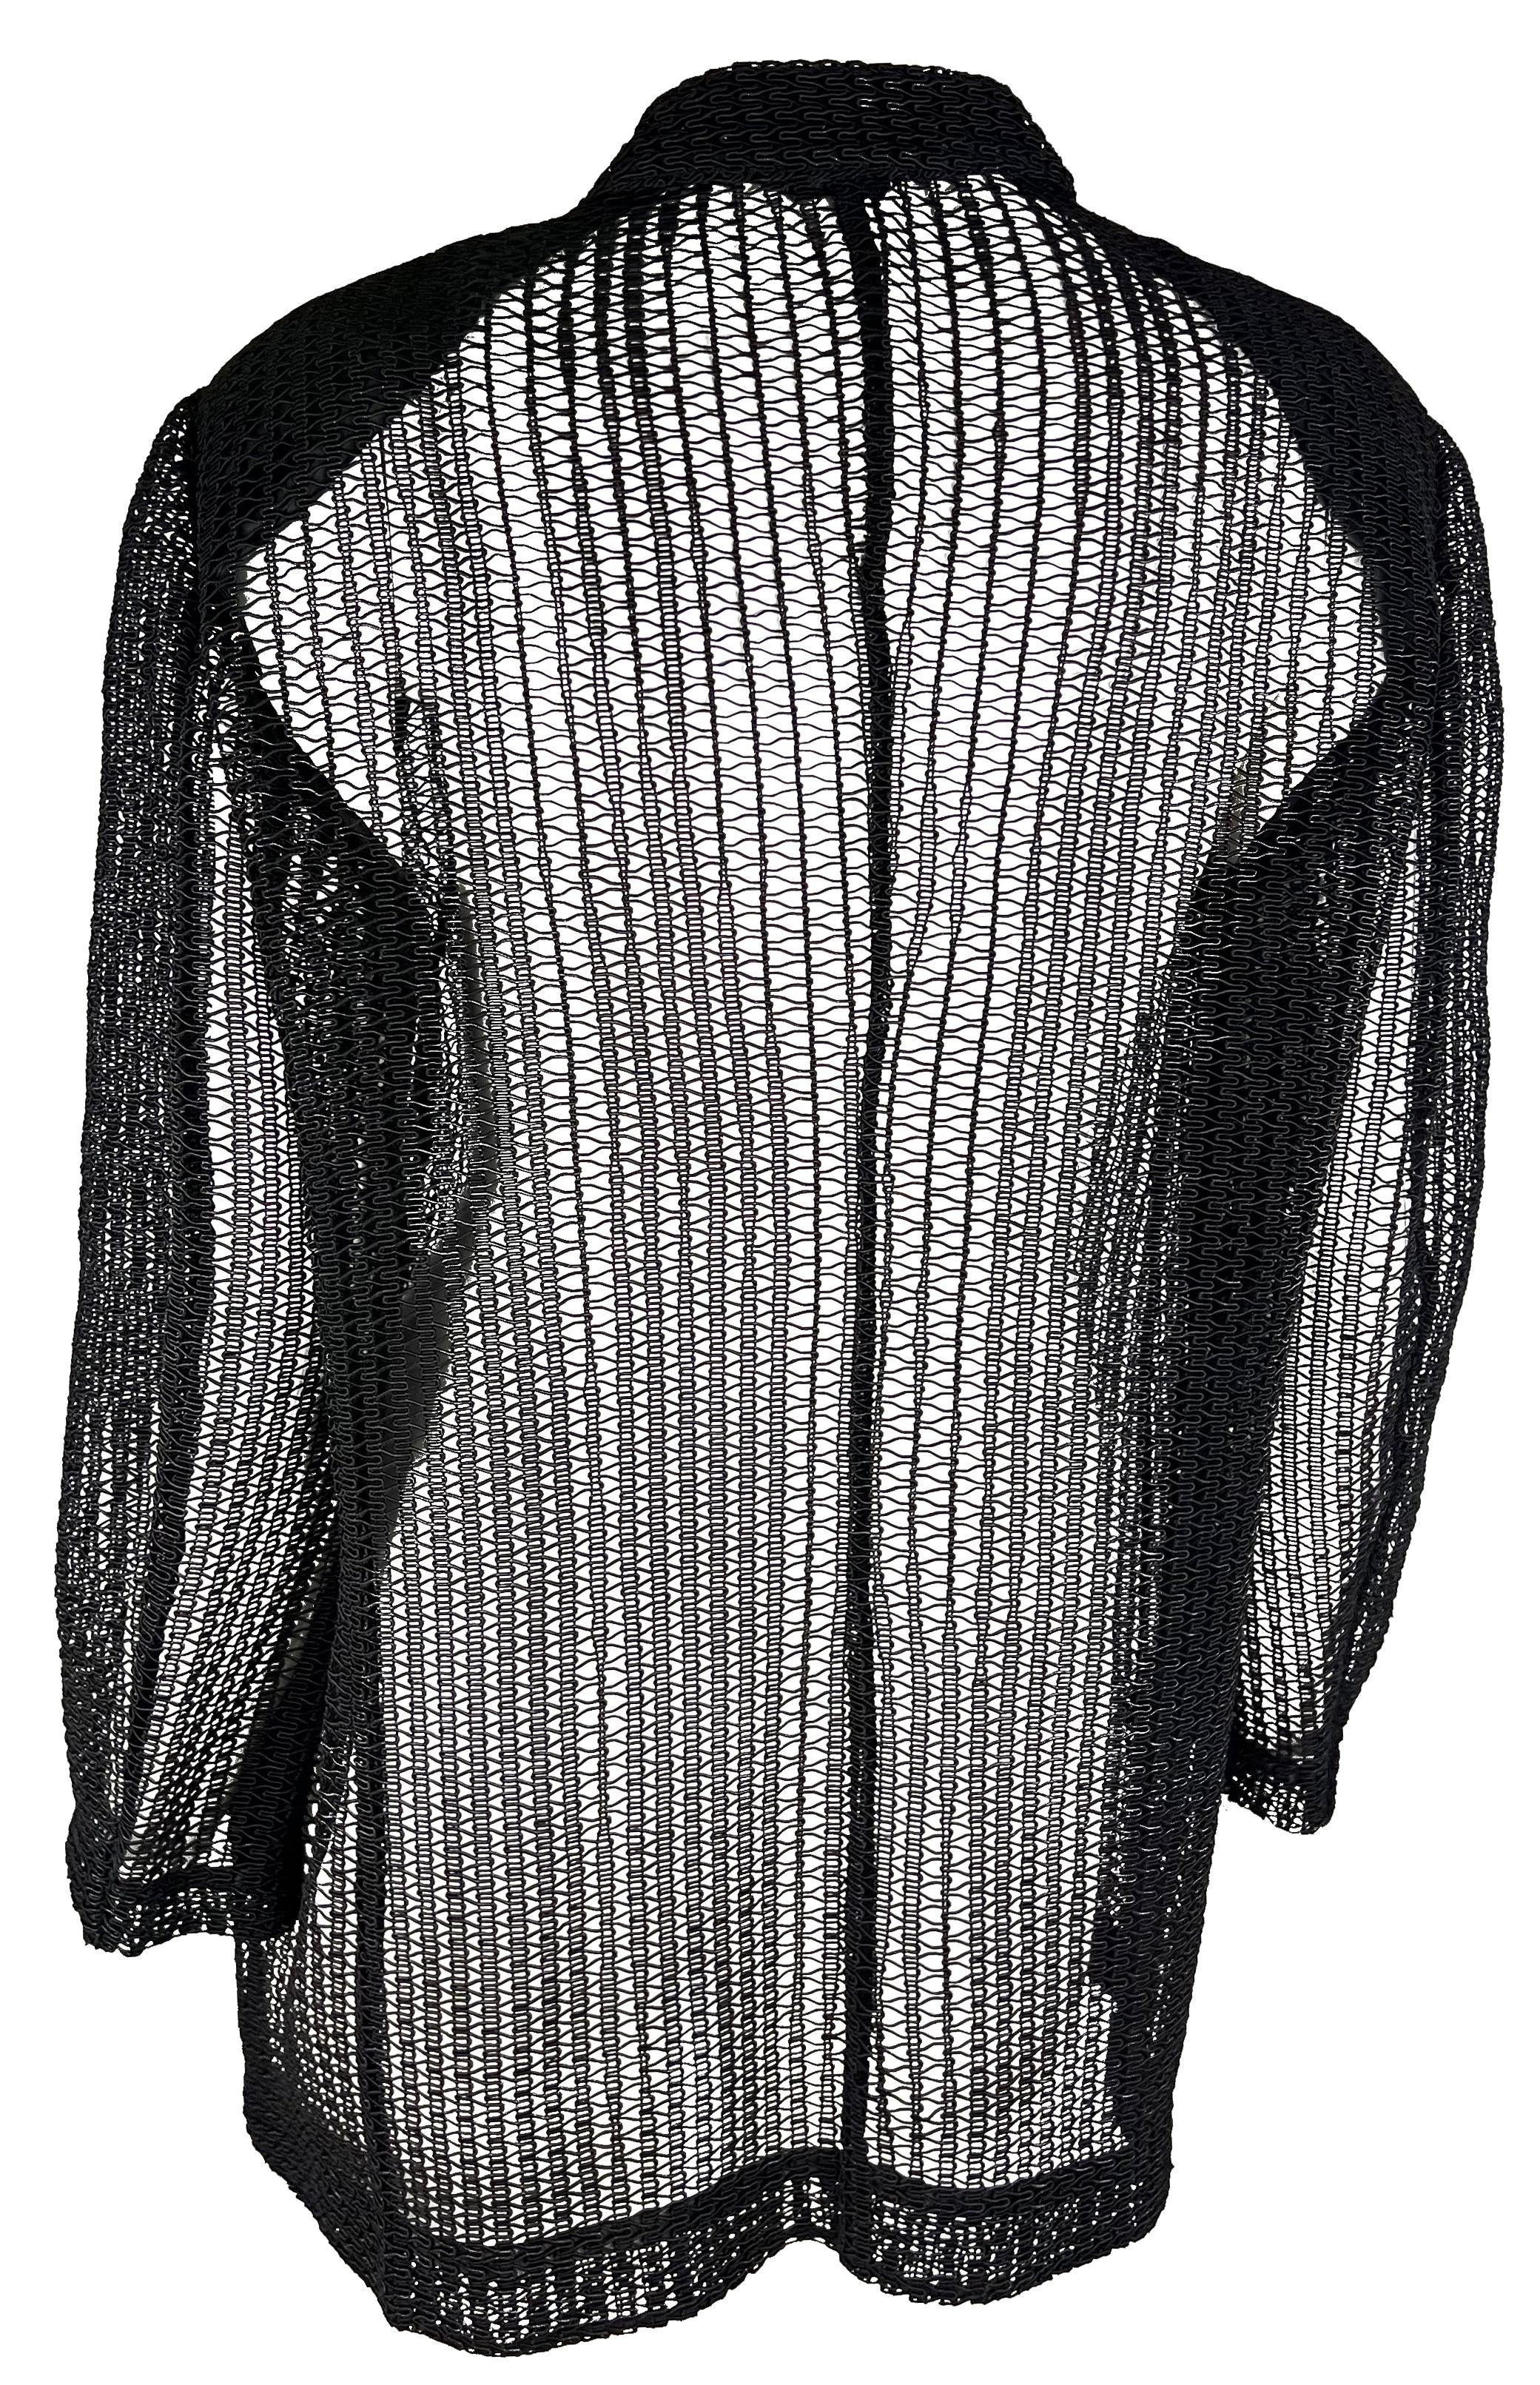 Women's 1990s Gianni Versace Black Loose Knit Sheer Oversized Medusa Jacket Blazer For Sale